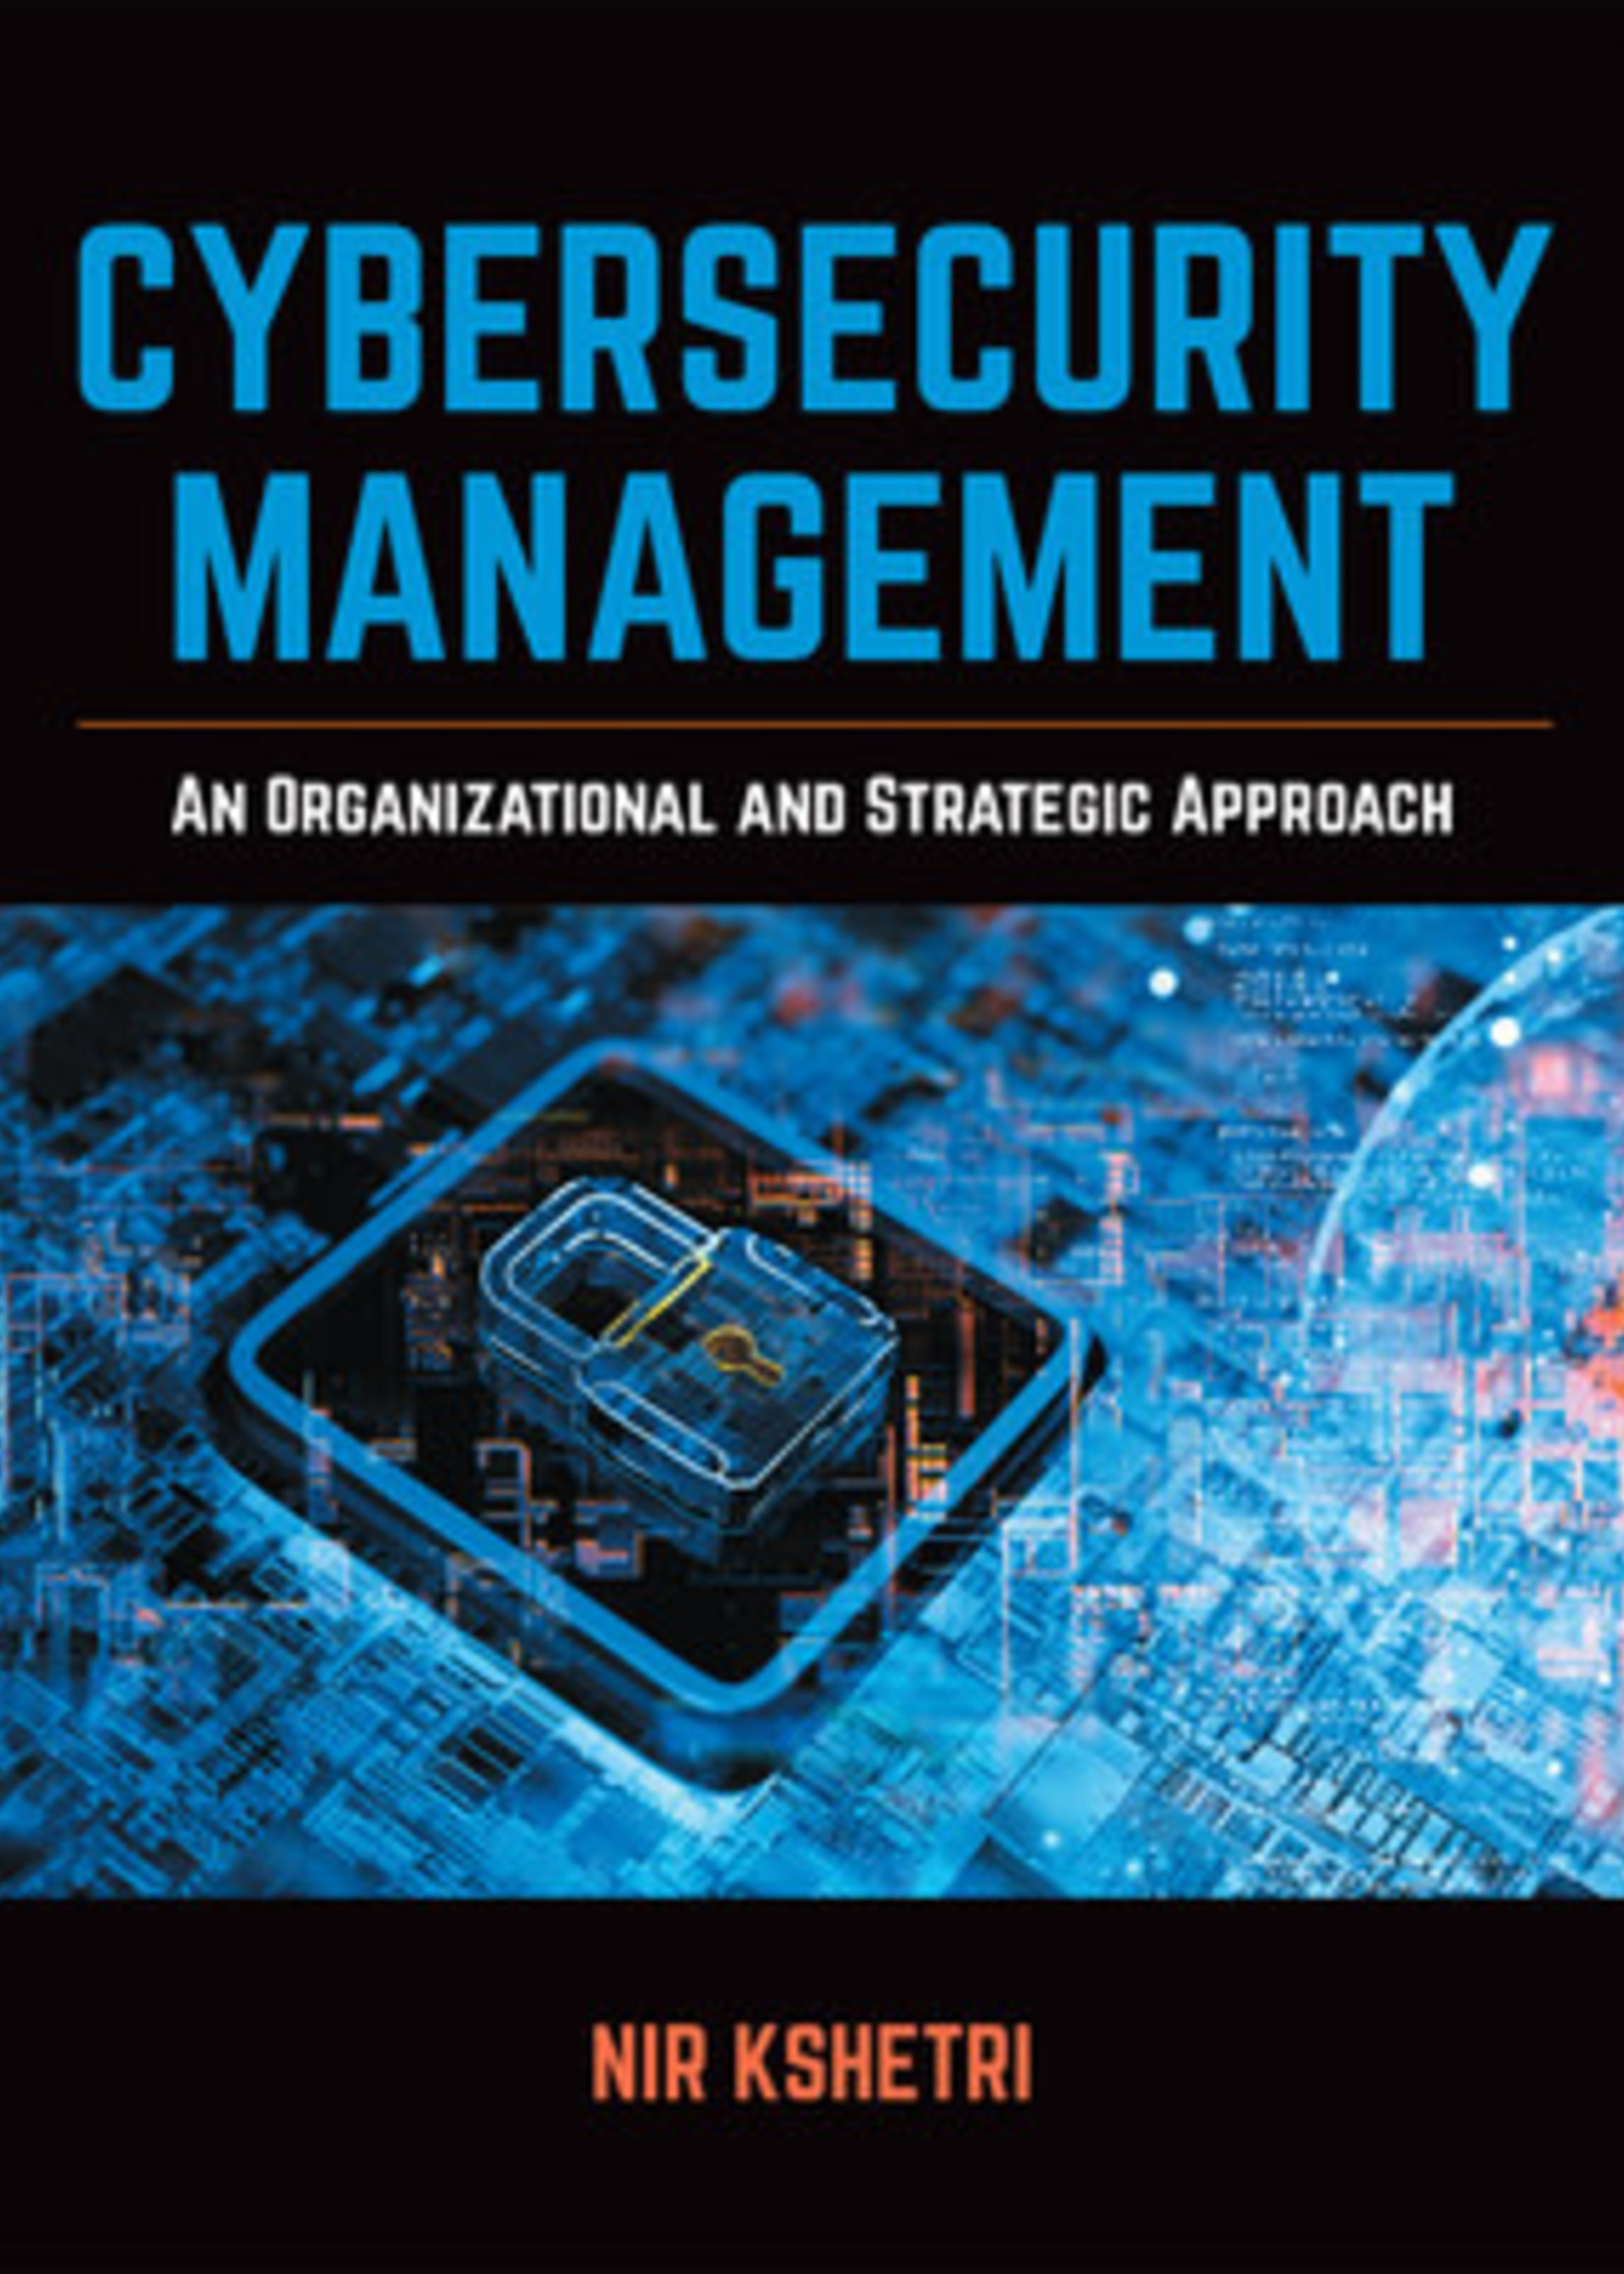 Cybersecurity Management: An Organizational and Strategic Approach by Nir Kshetri